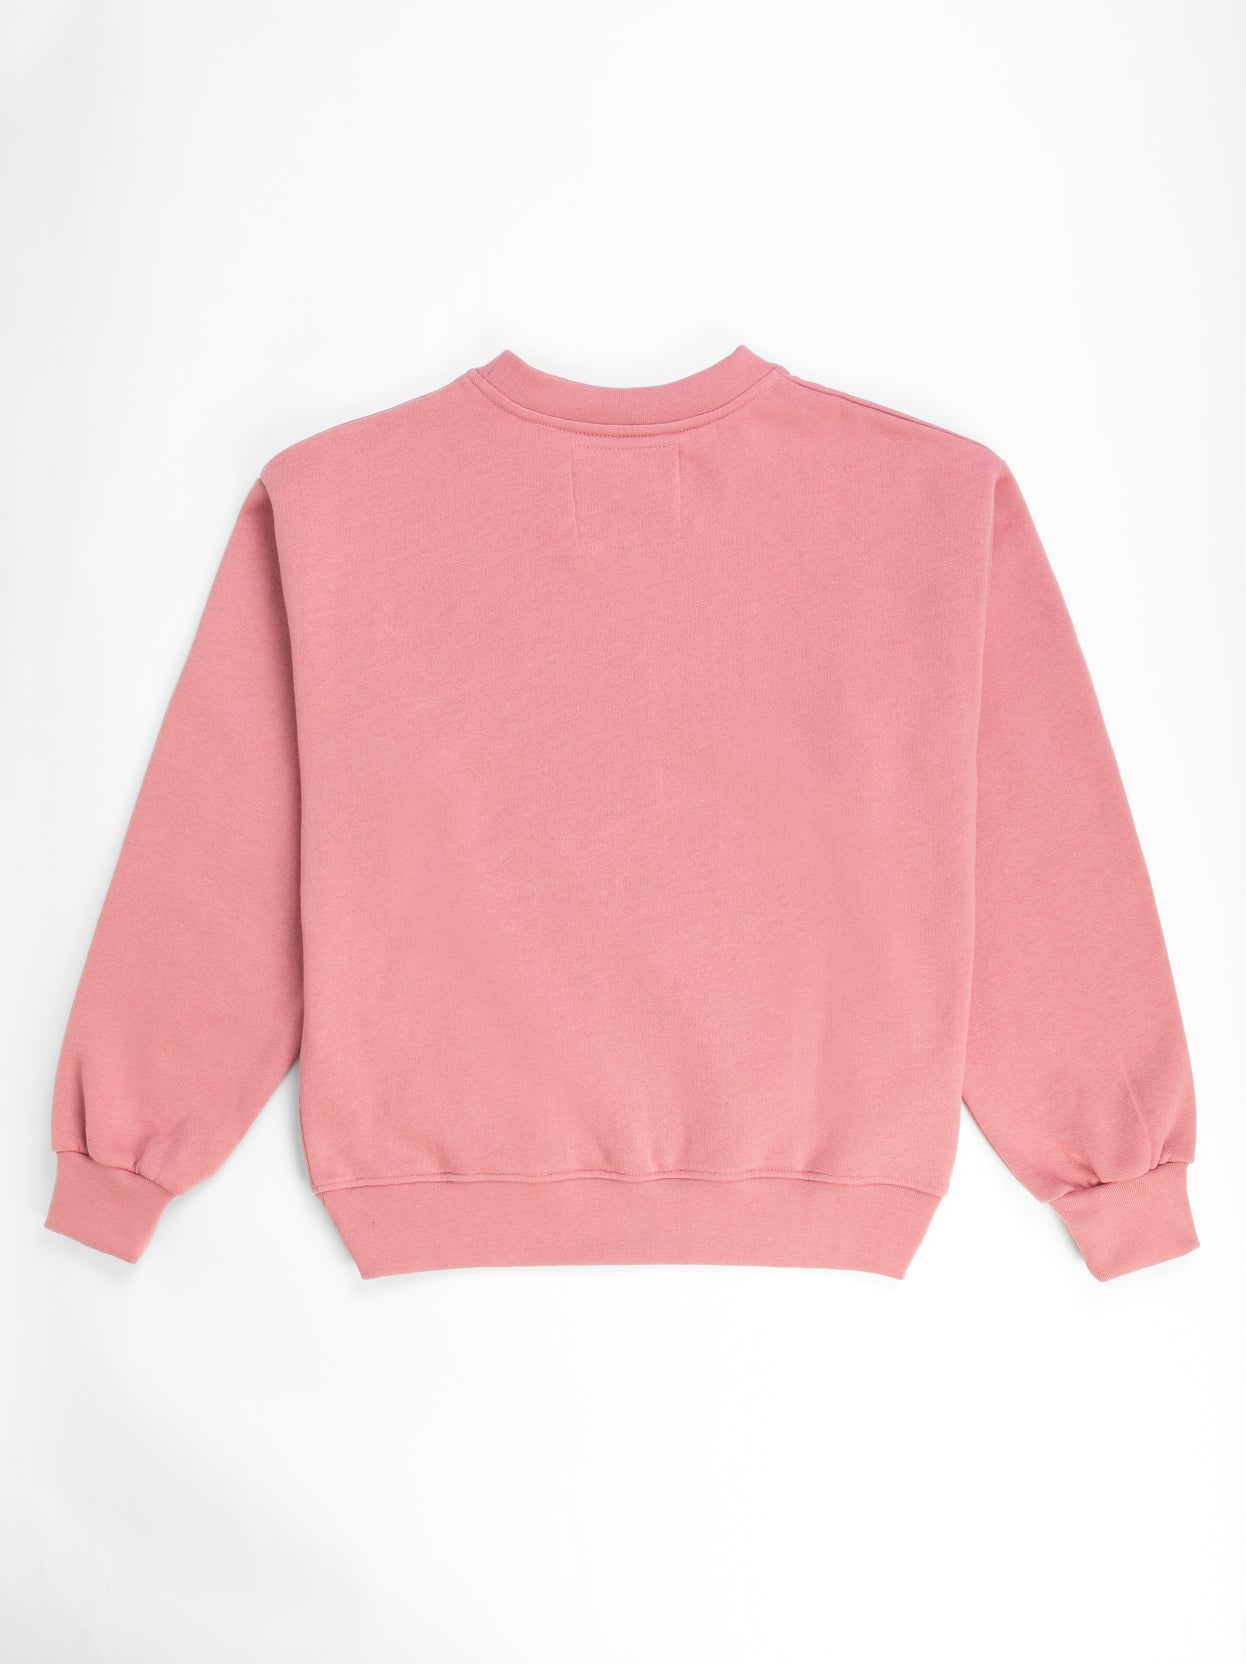 Old Pink Cropped Sweatshirt back